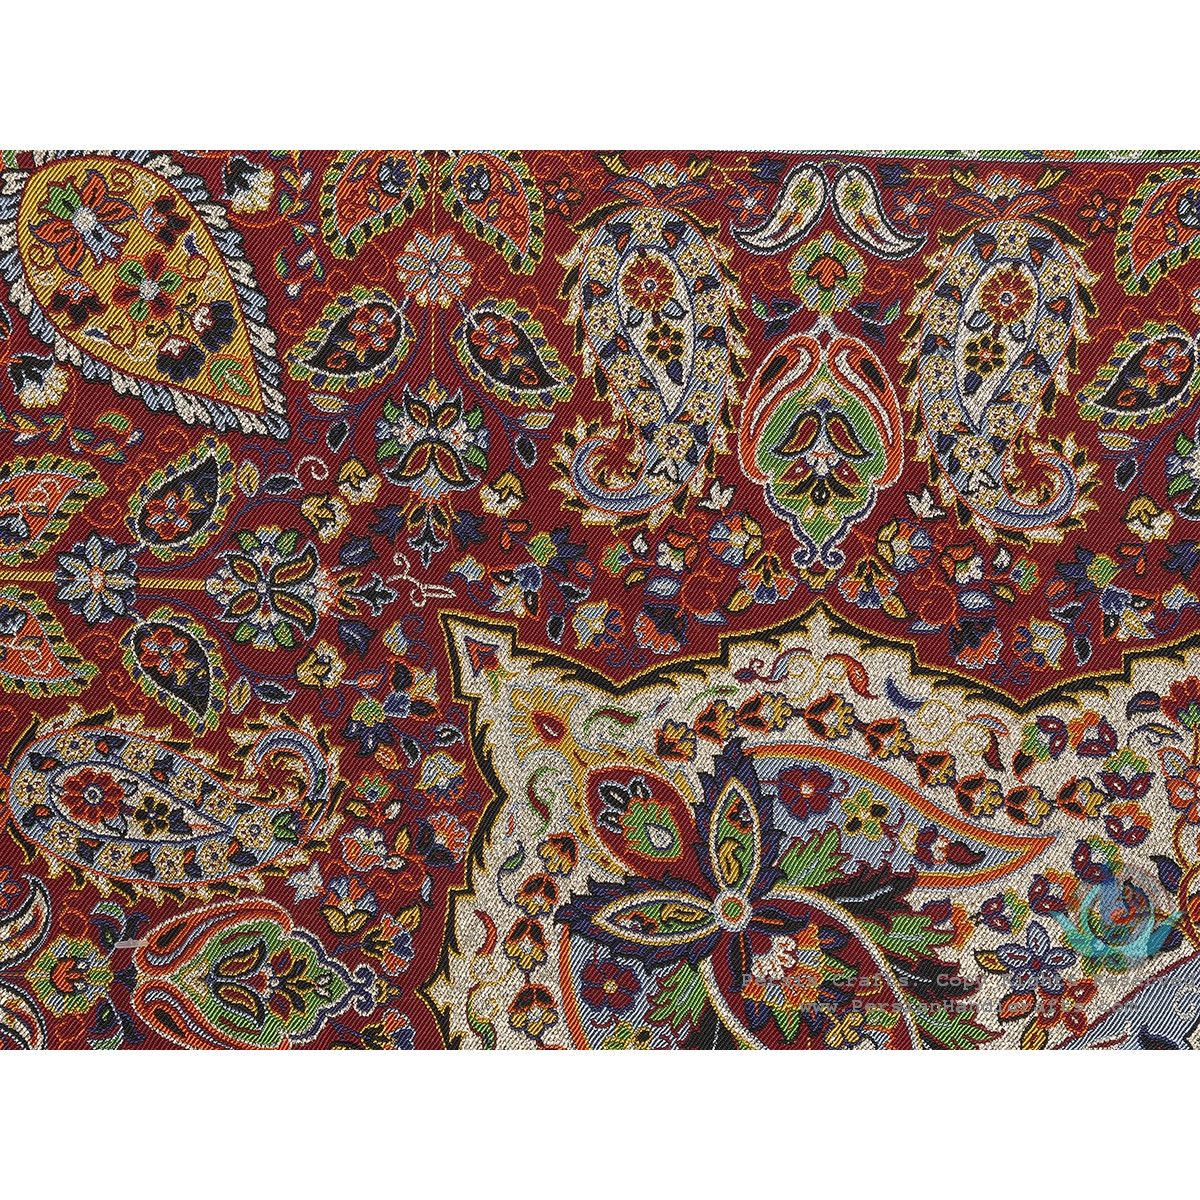 Privileged Termeh Paisly & Toranj Design Tablecloth - HT3906-Persian Handicrafts